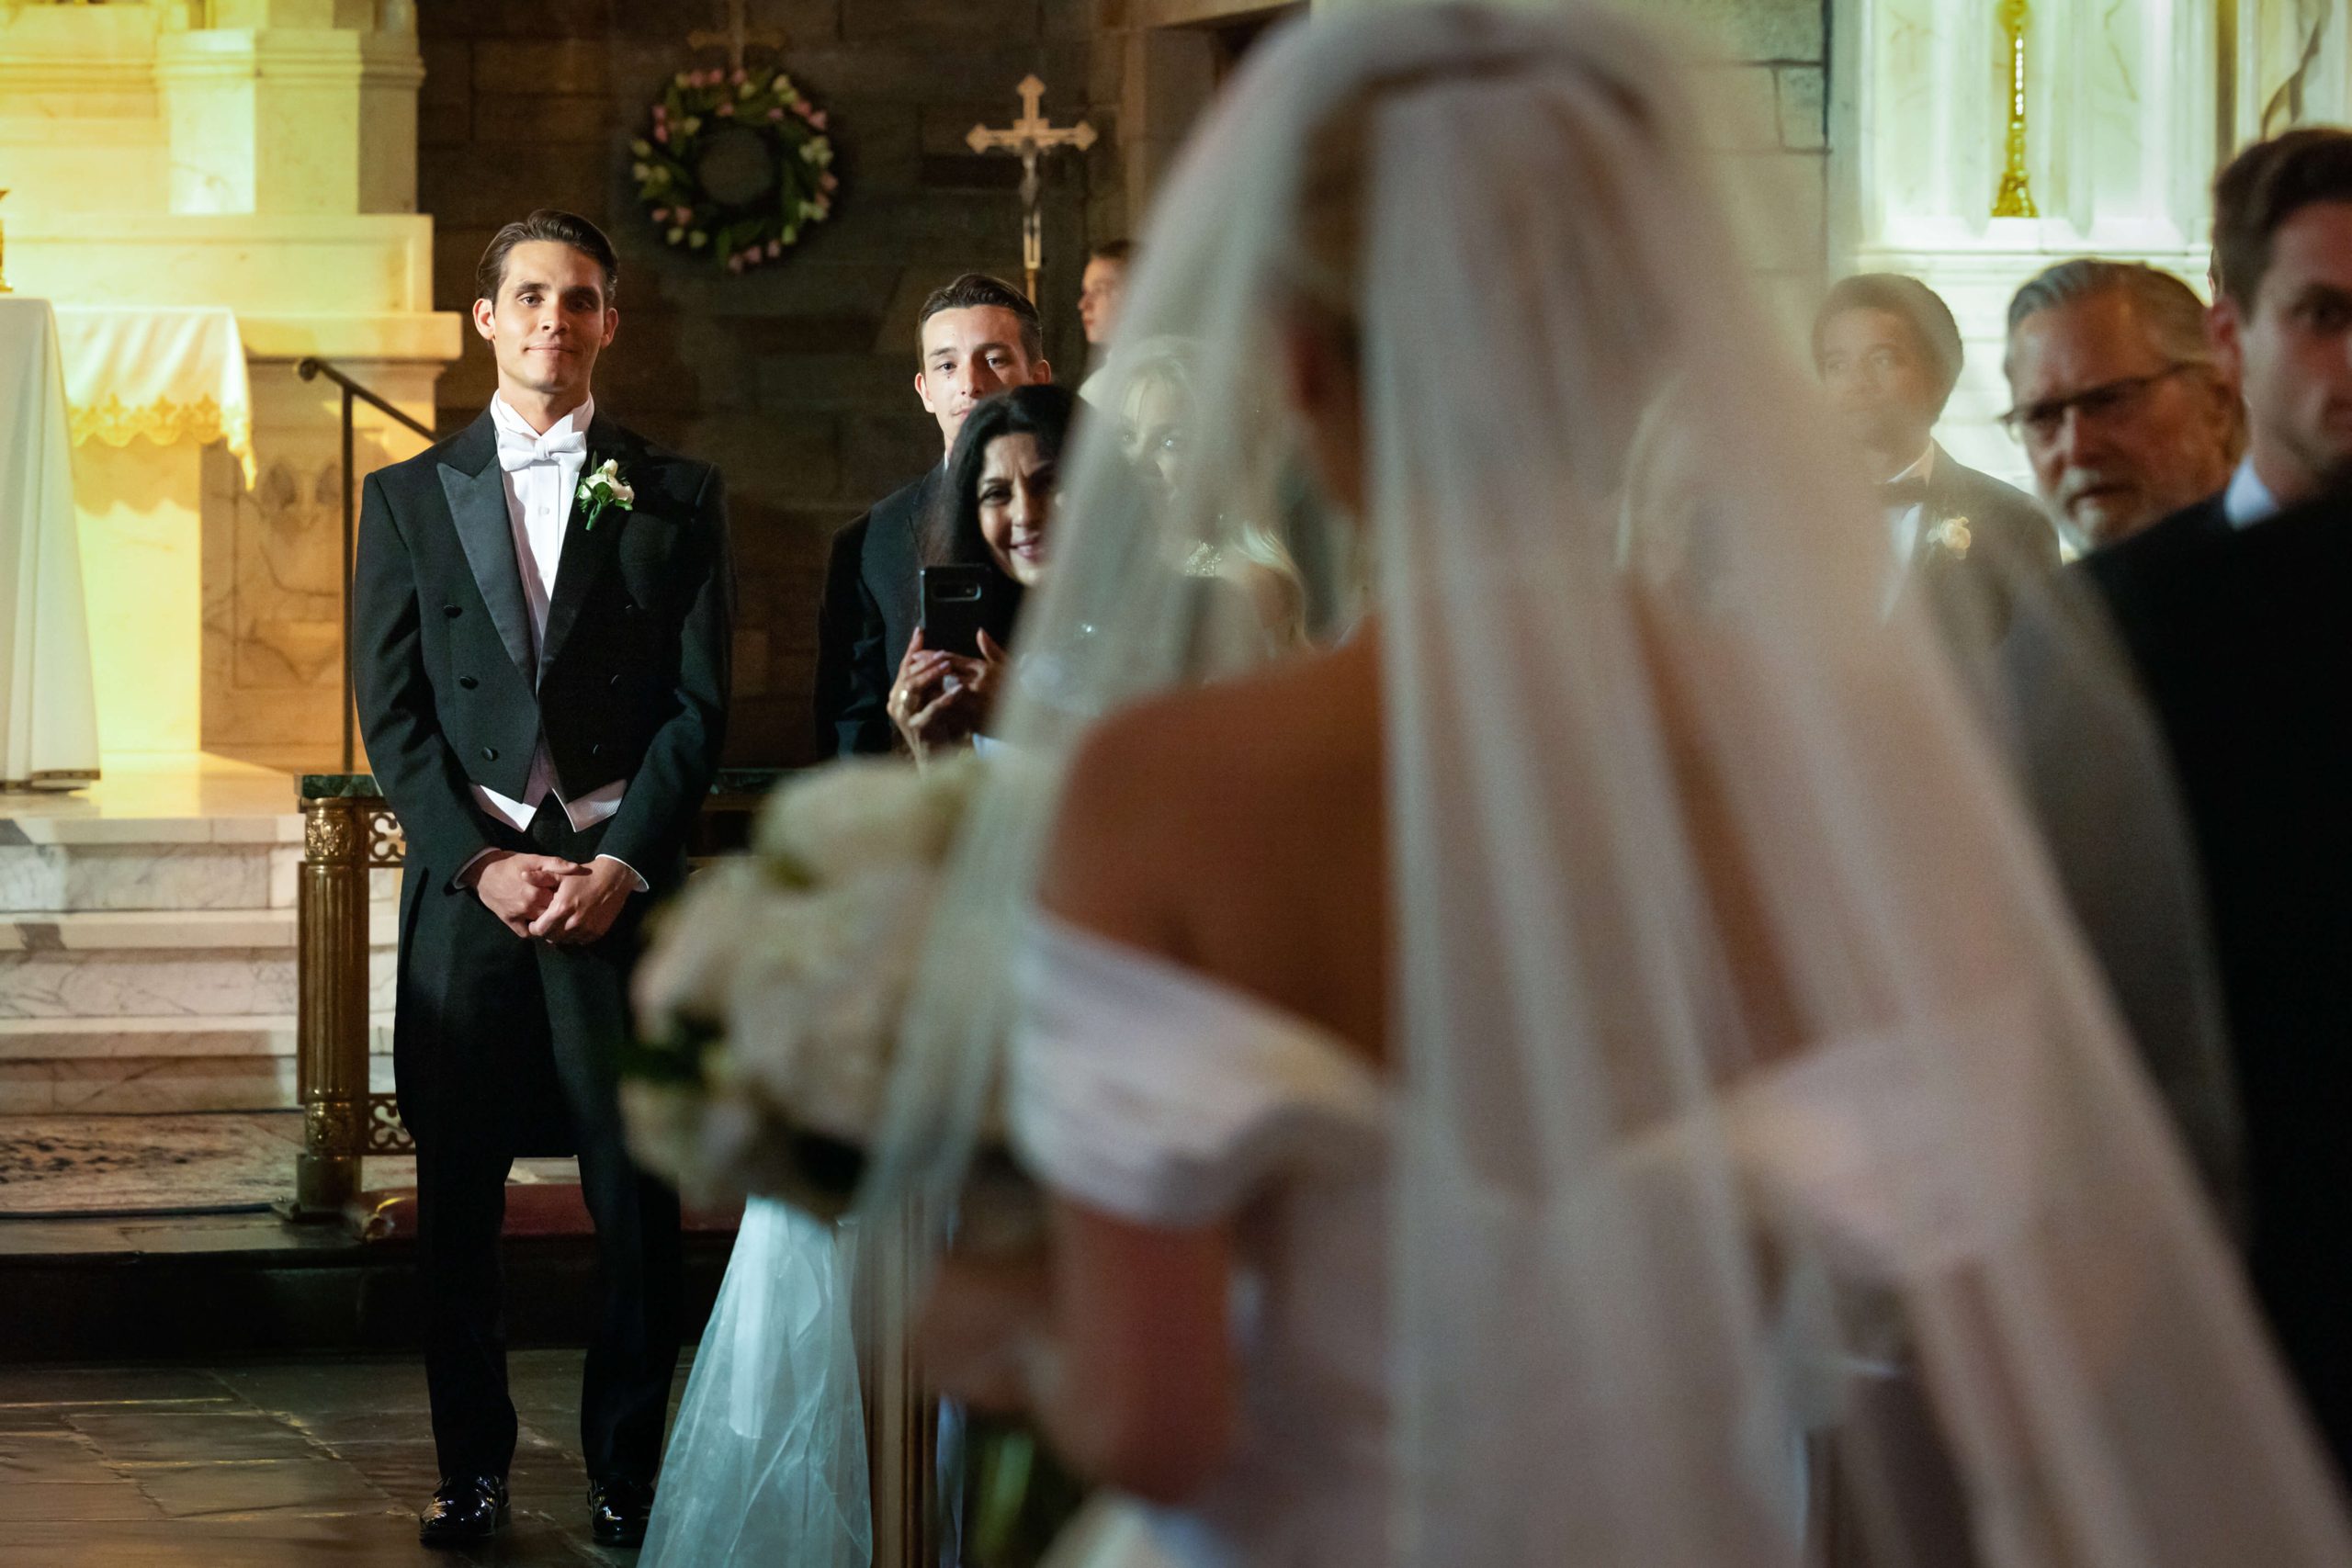 grooms sees bride walk down the aisle in wedding dress